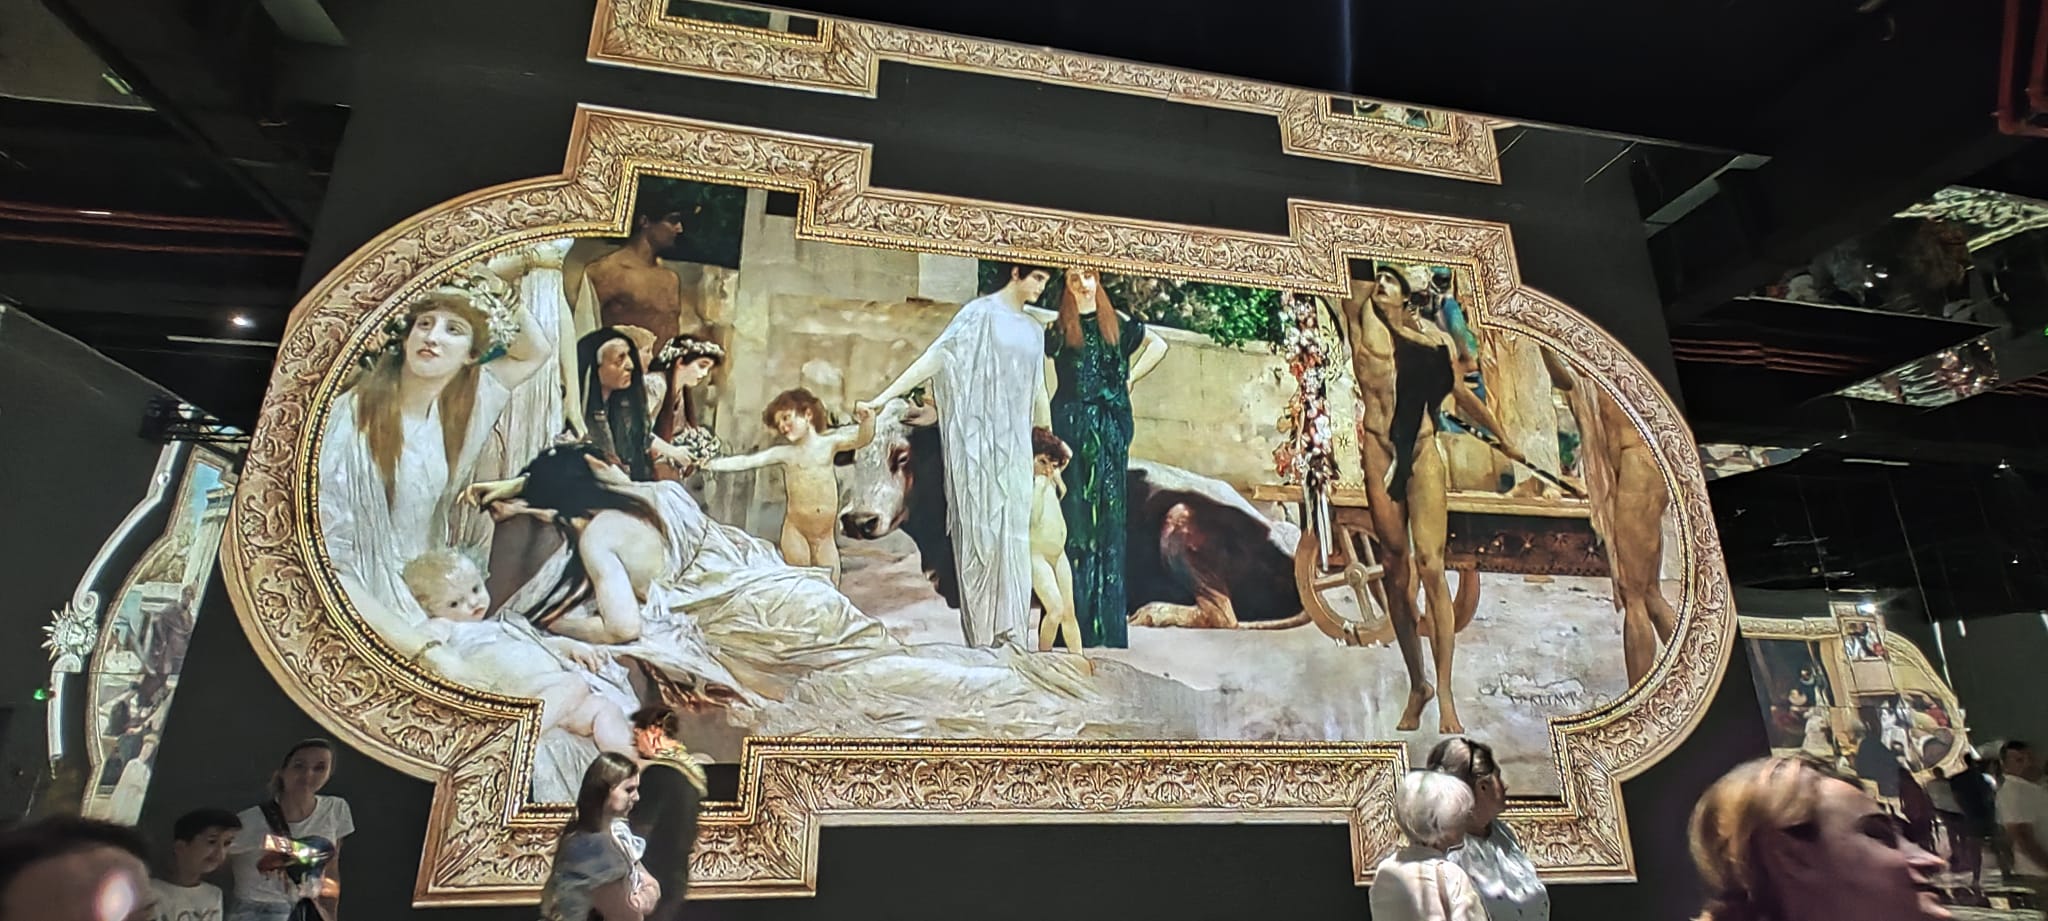 Gustav Klimt - The Immersive Show